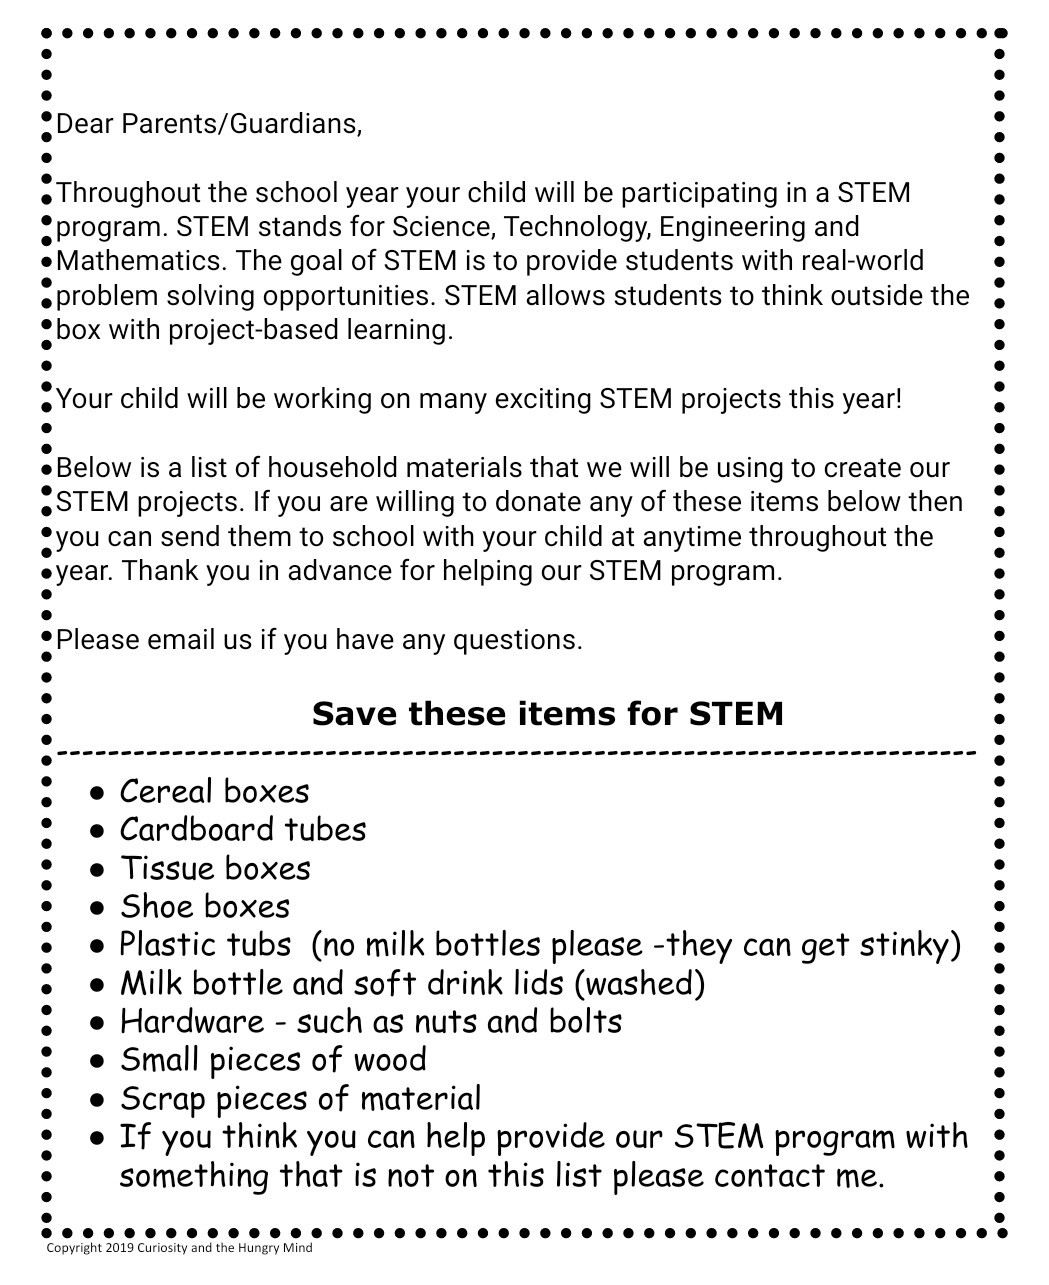 STEM materials letter to parents